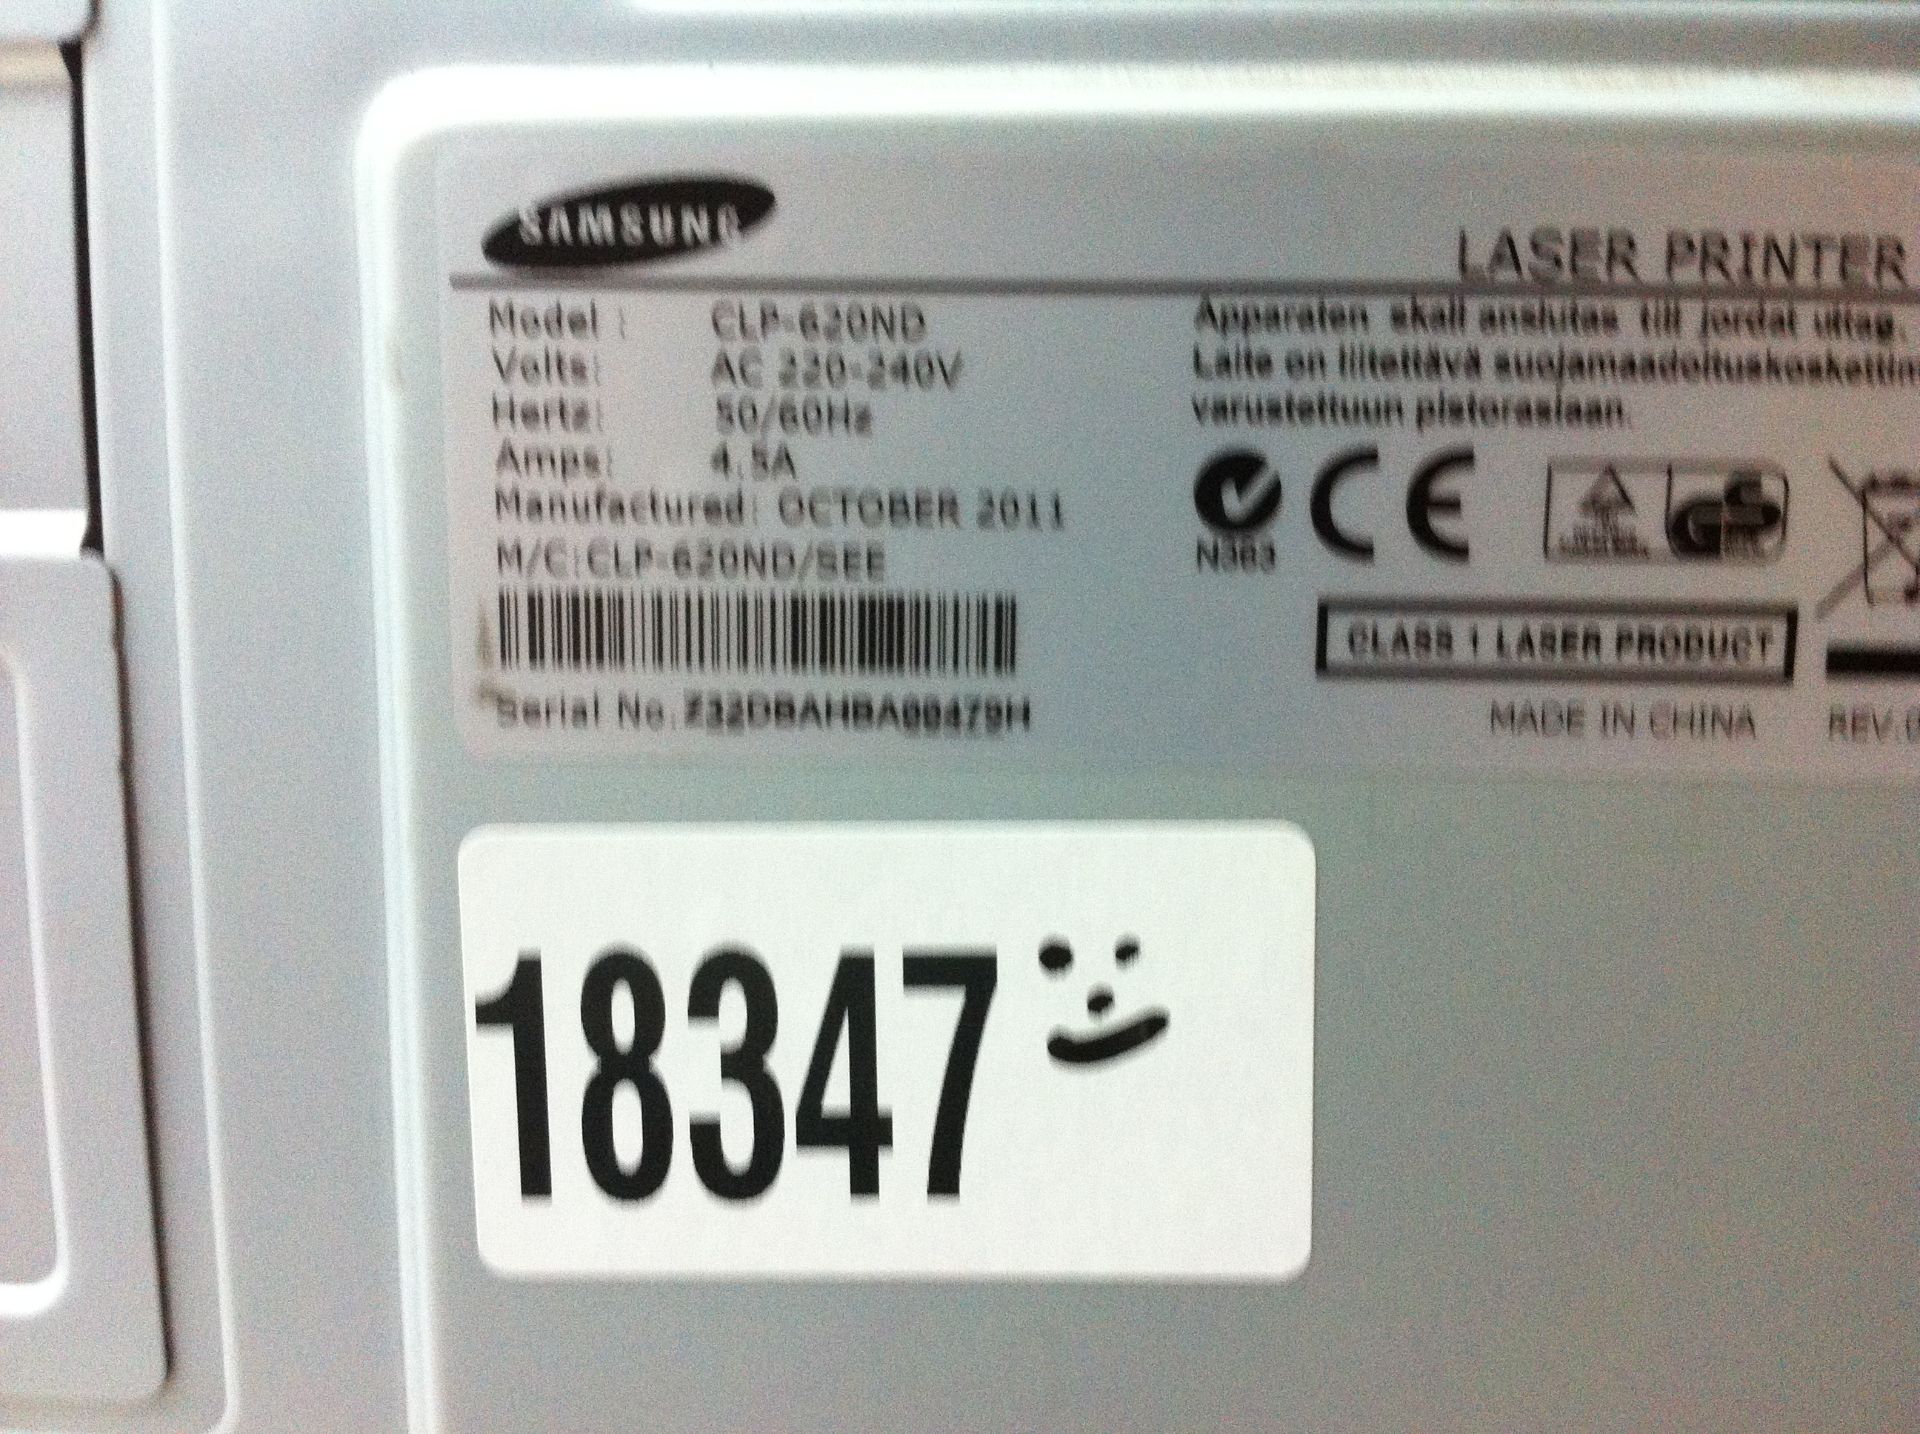 Samsung CLP-620ND A4 Colour laser printer - Image 3 of 3